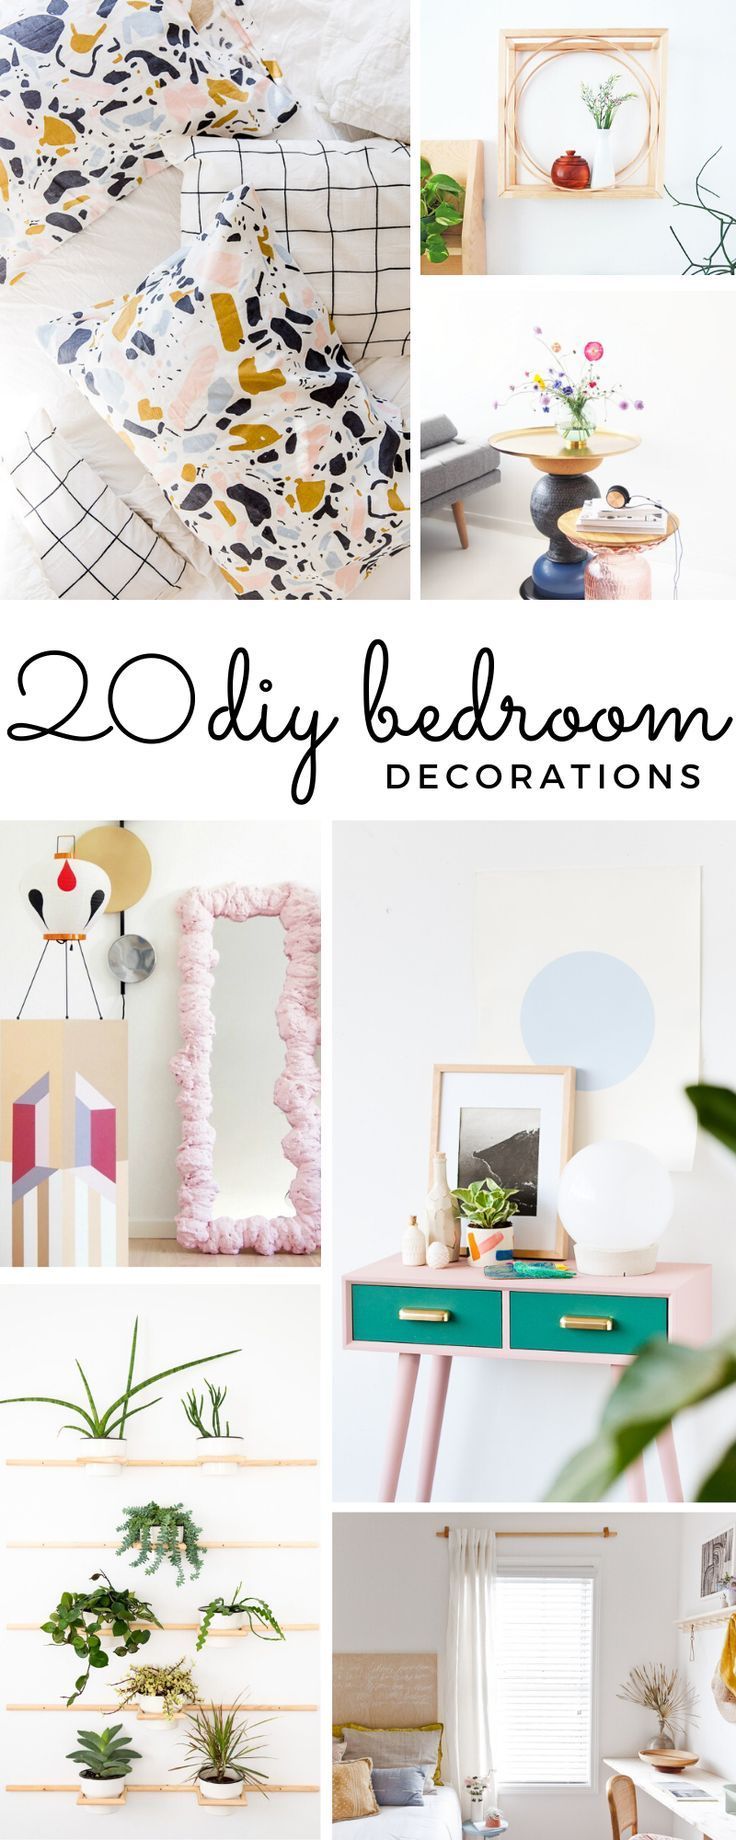 20 EASY DIY BEDROOM DECOR IDEAS FOR WOMEN ON A BUDGET -   17 home decor for cheap diy bedrooms ideas